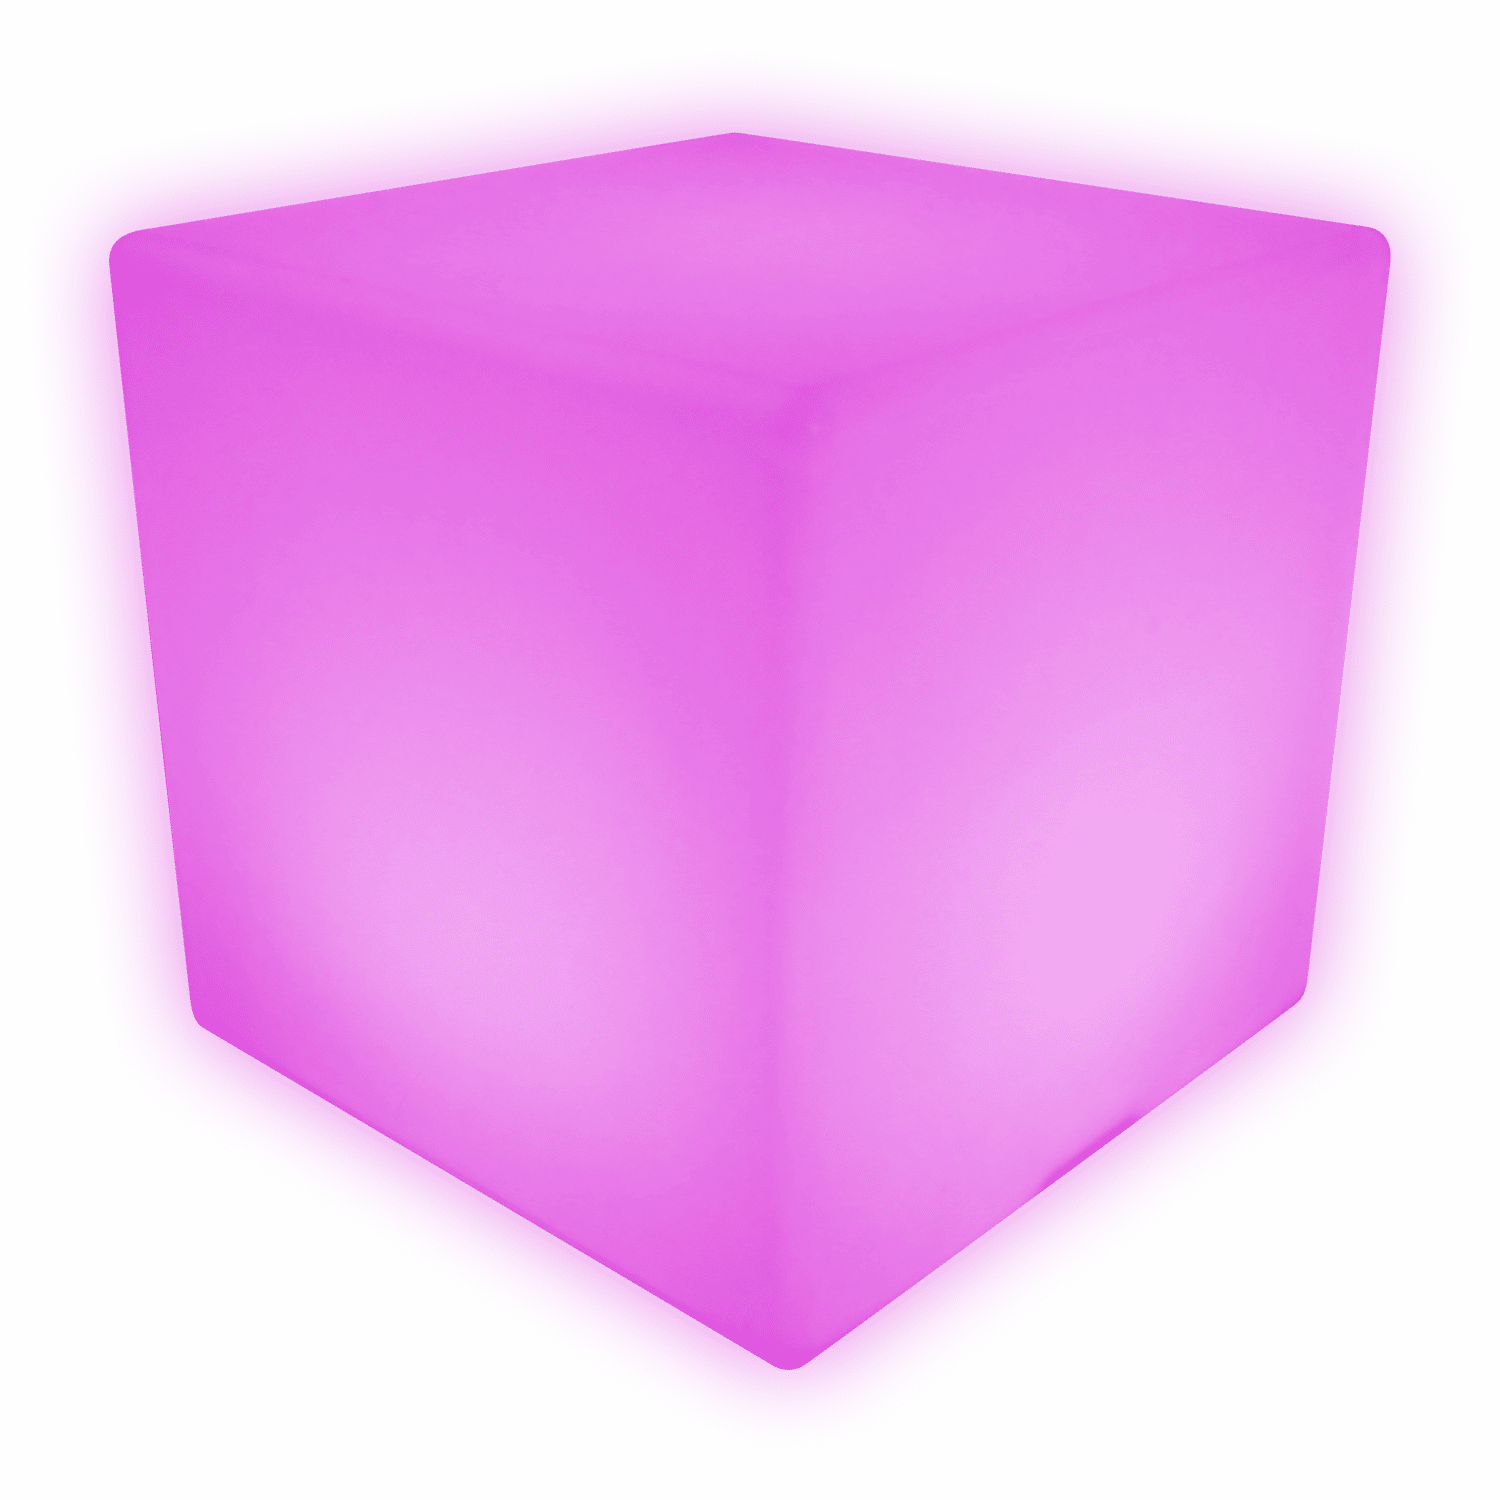 Cube lumineux LED 40cm multicolore NAOS